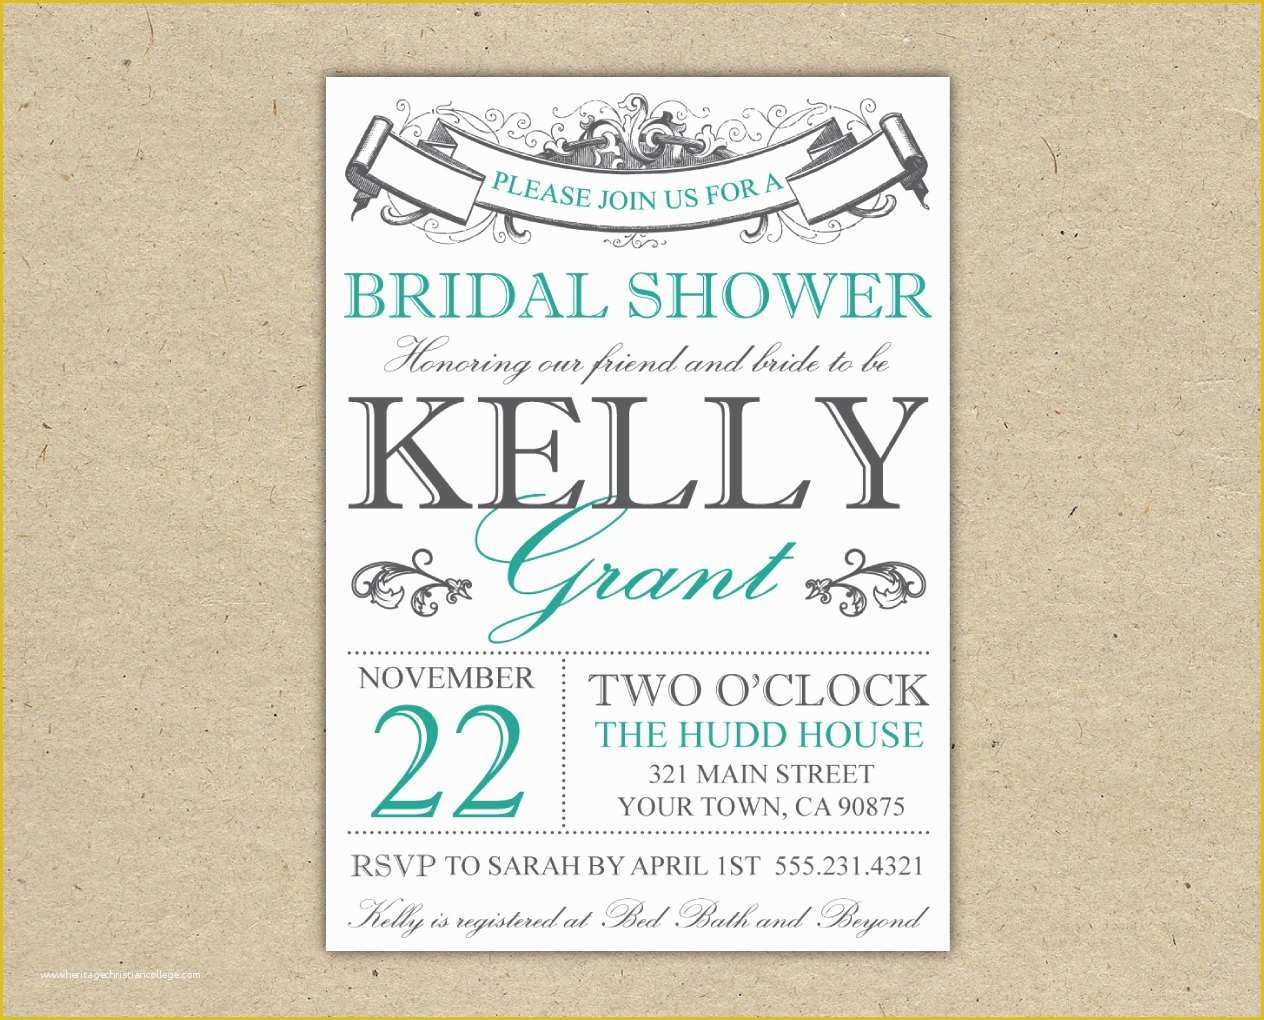 Wedding Shower Invitations Templates Free Download Of Bridal Shower Invitation Templates